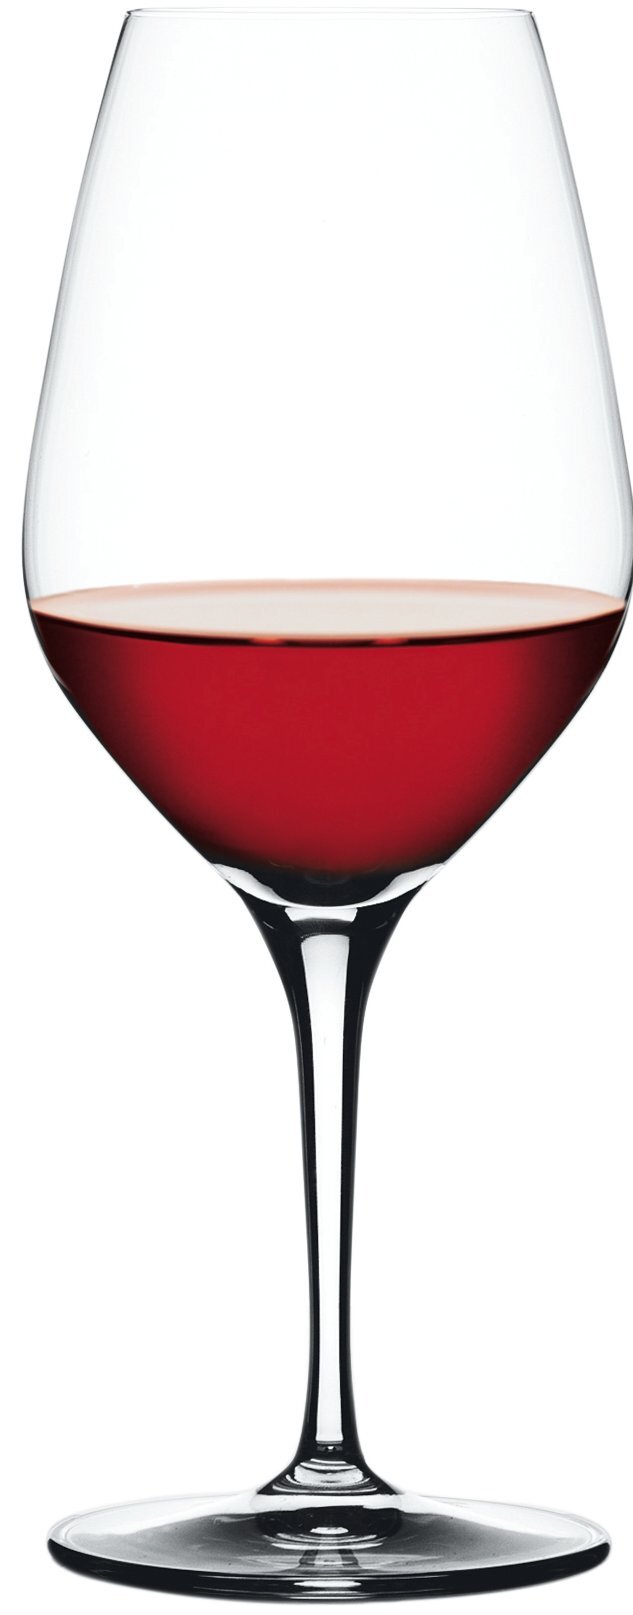 Spiegelau Authentis Rode Wijnglas Set van 4 - 480 ml